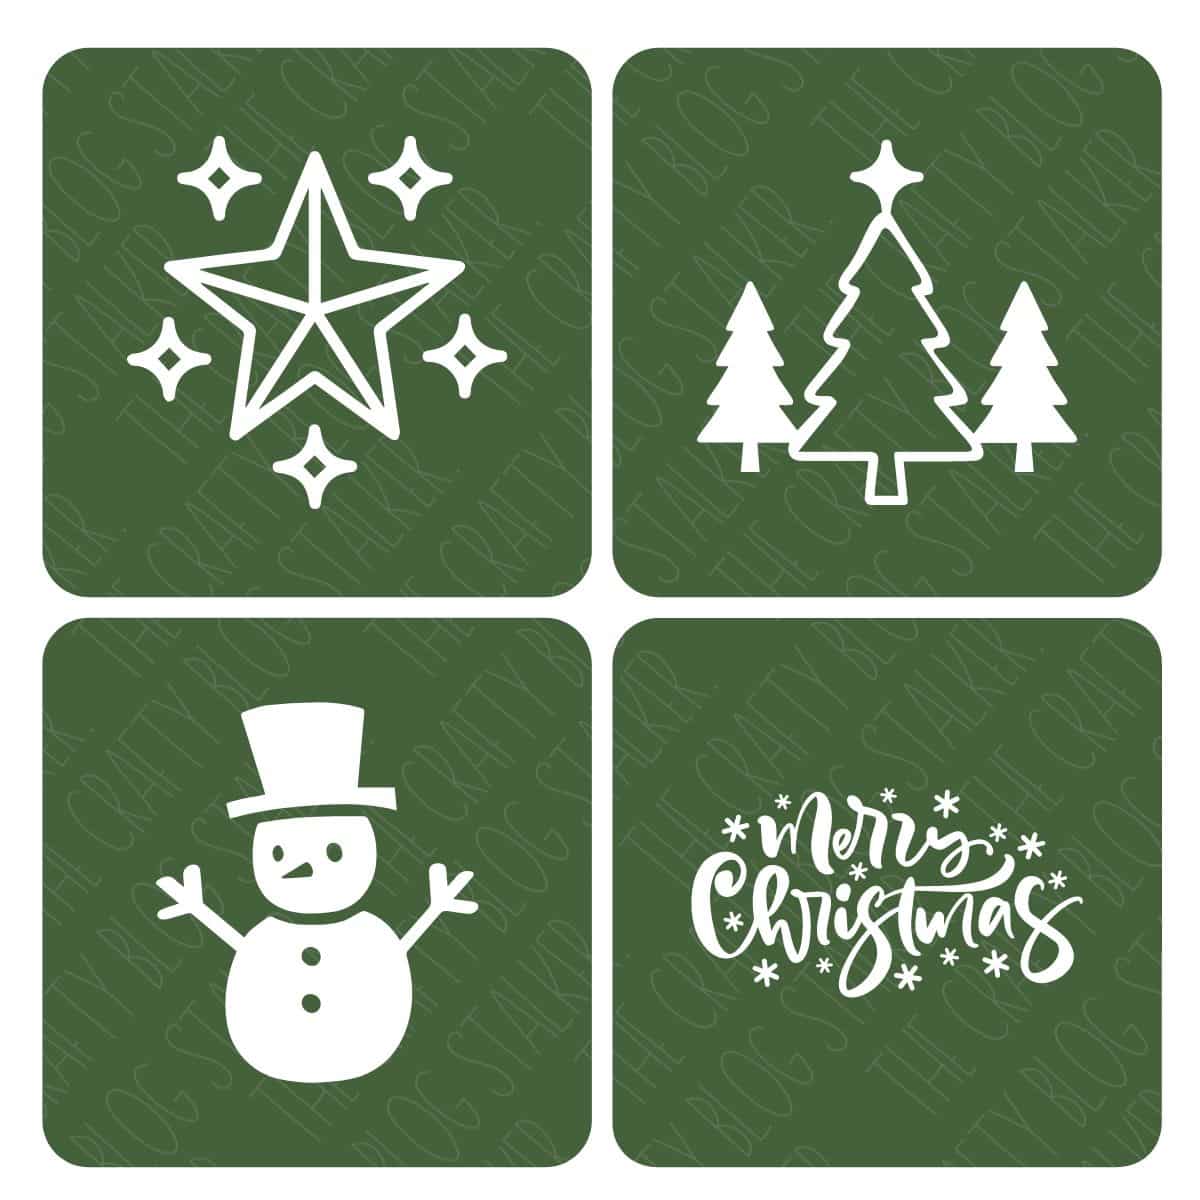 Christmas Ornament Stencils - The Crafty Blog Stalker